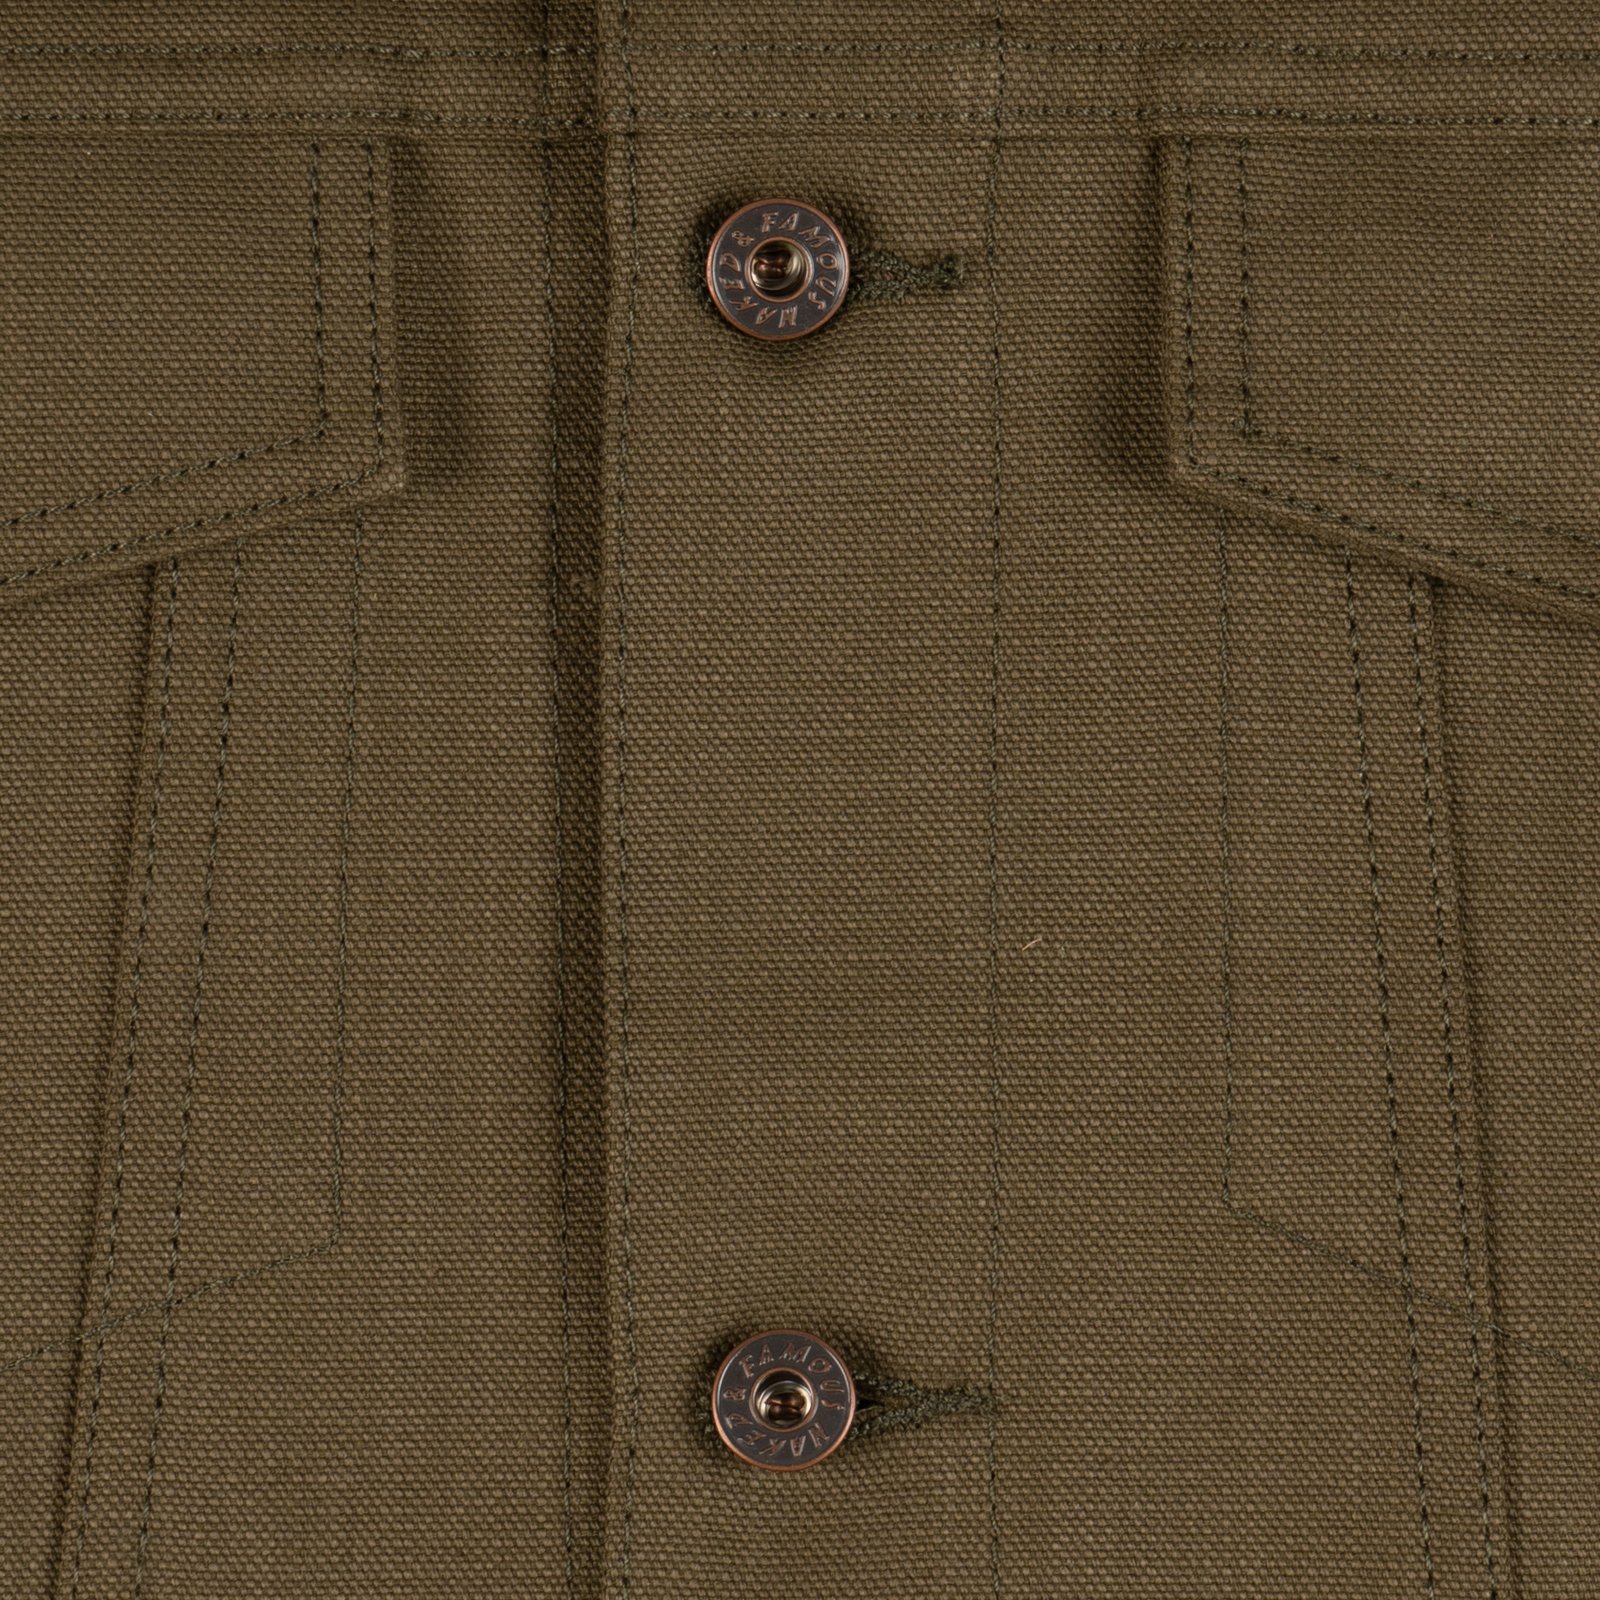  Denim Jacket - Raw Cotton Canvas - Olive - closeup front 